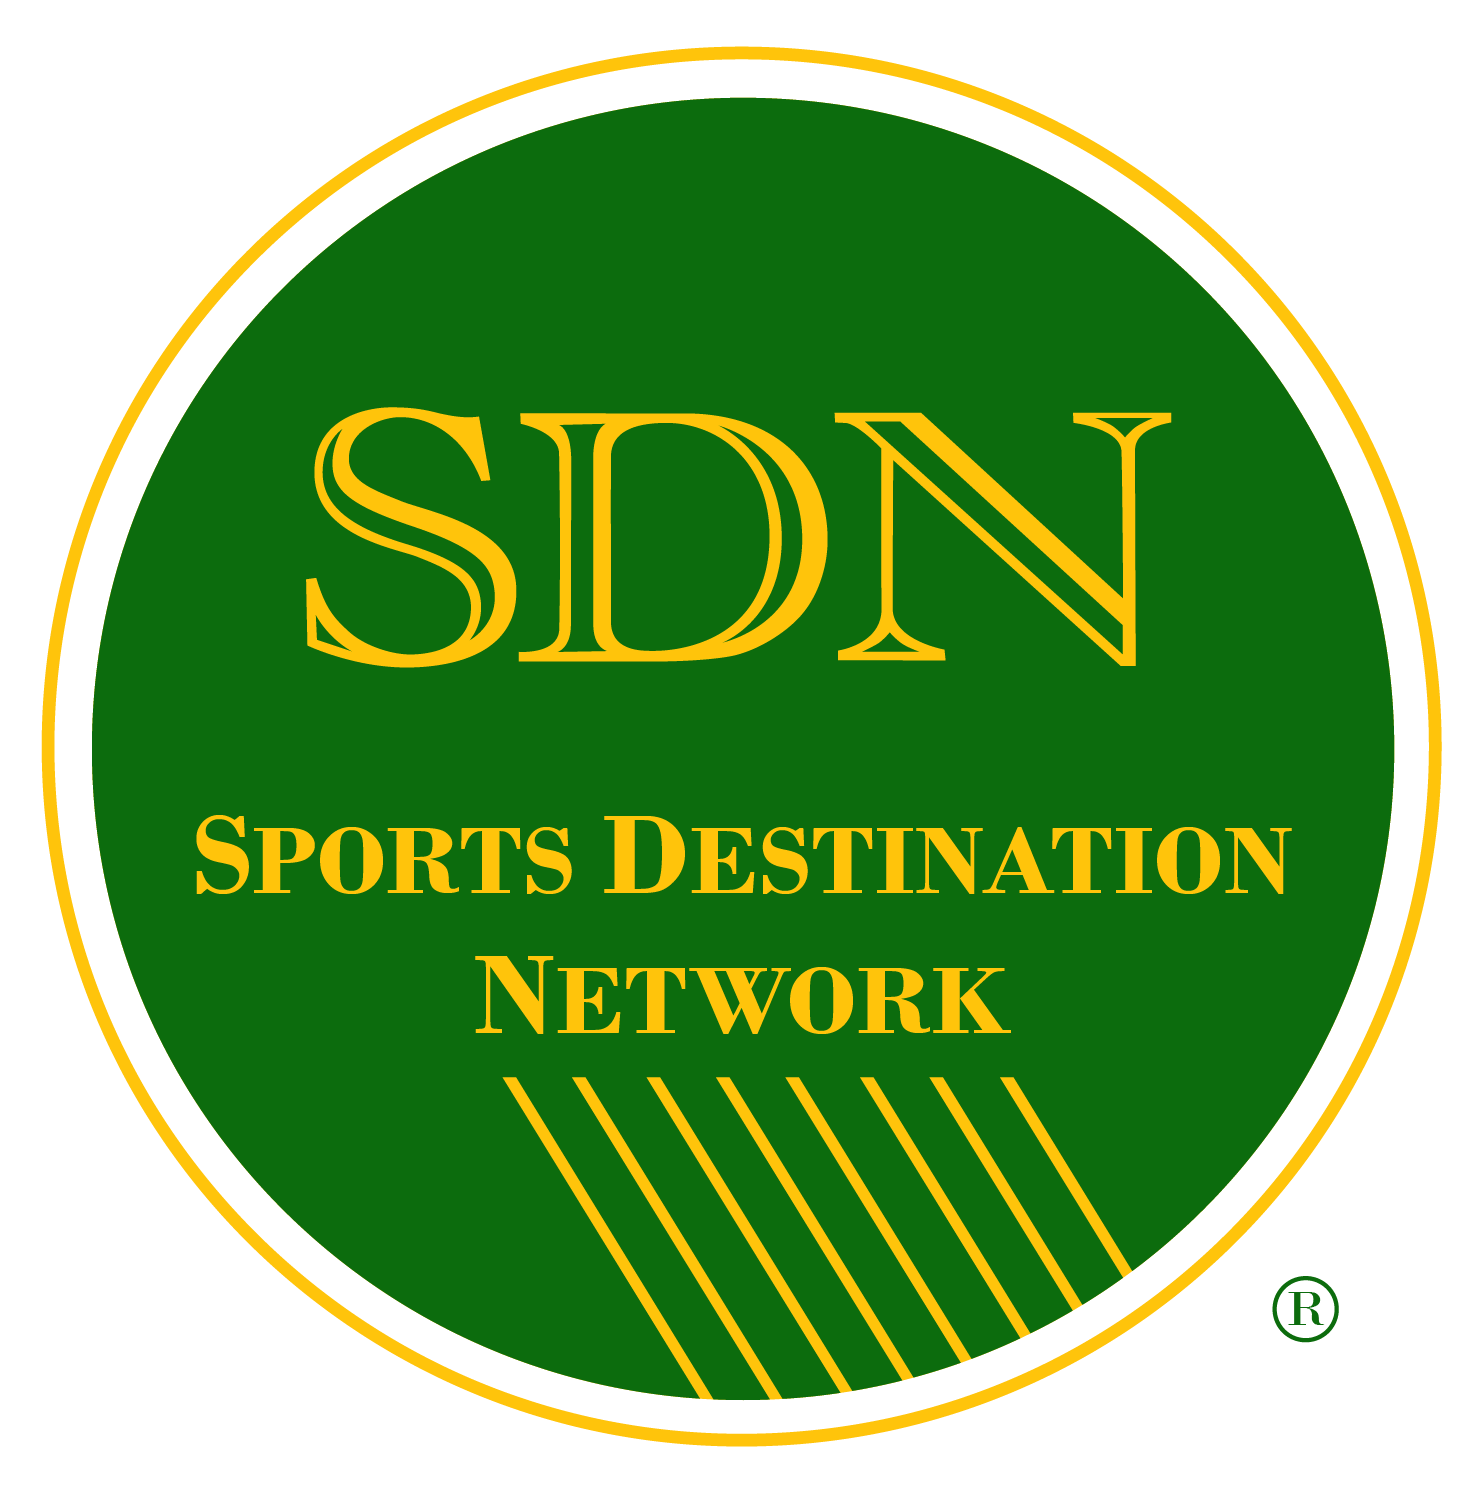 Sports Destination Network, Inc